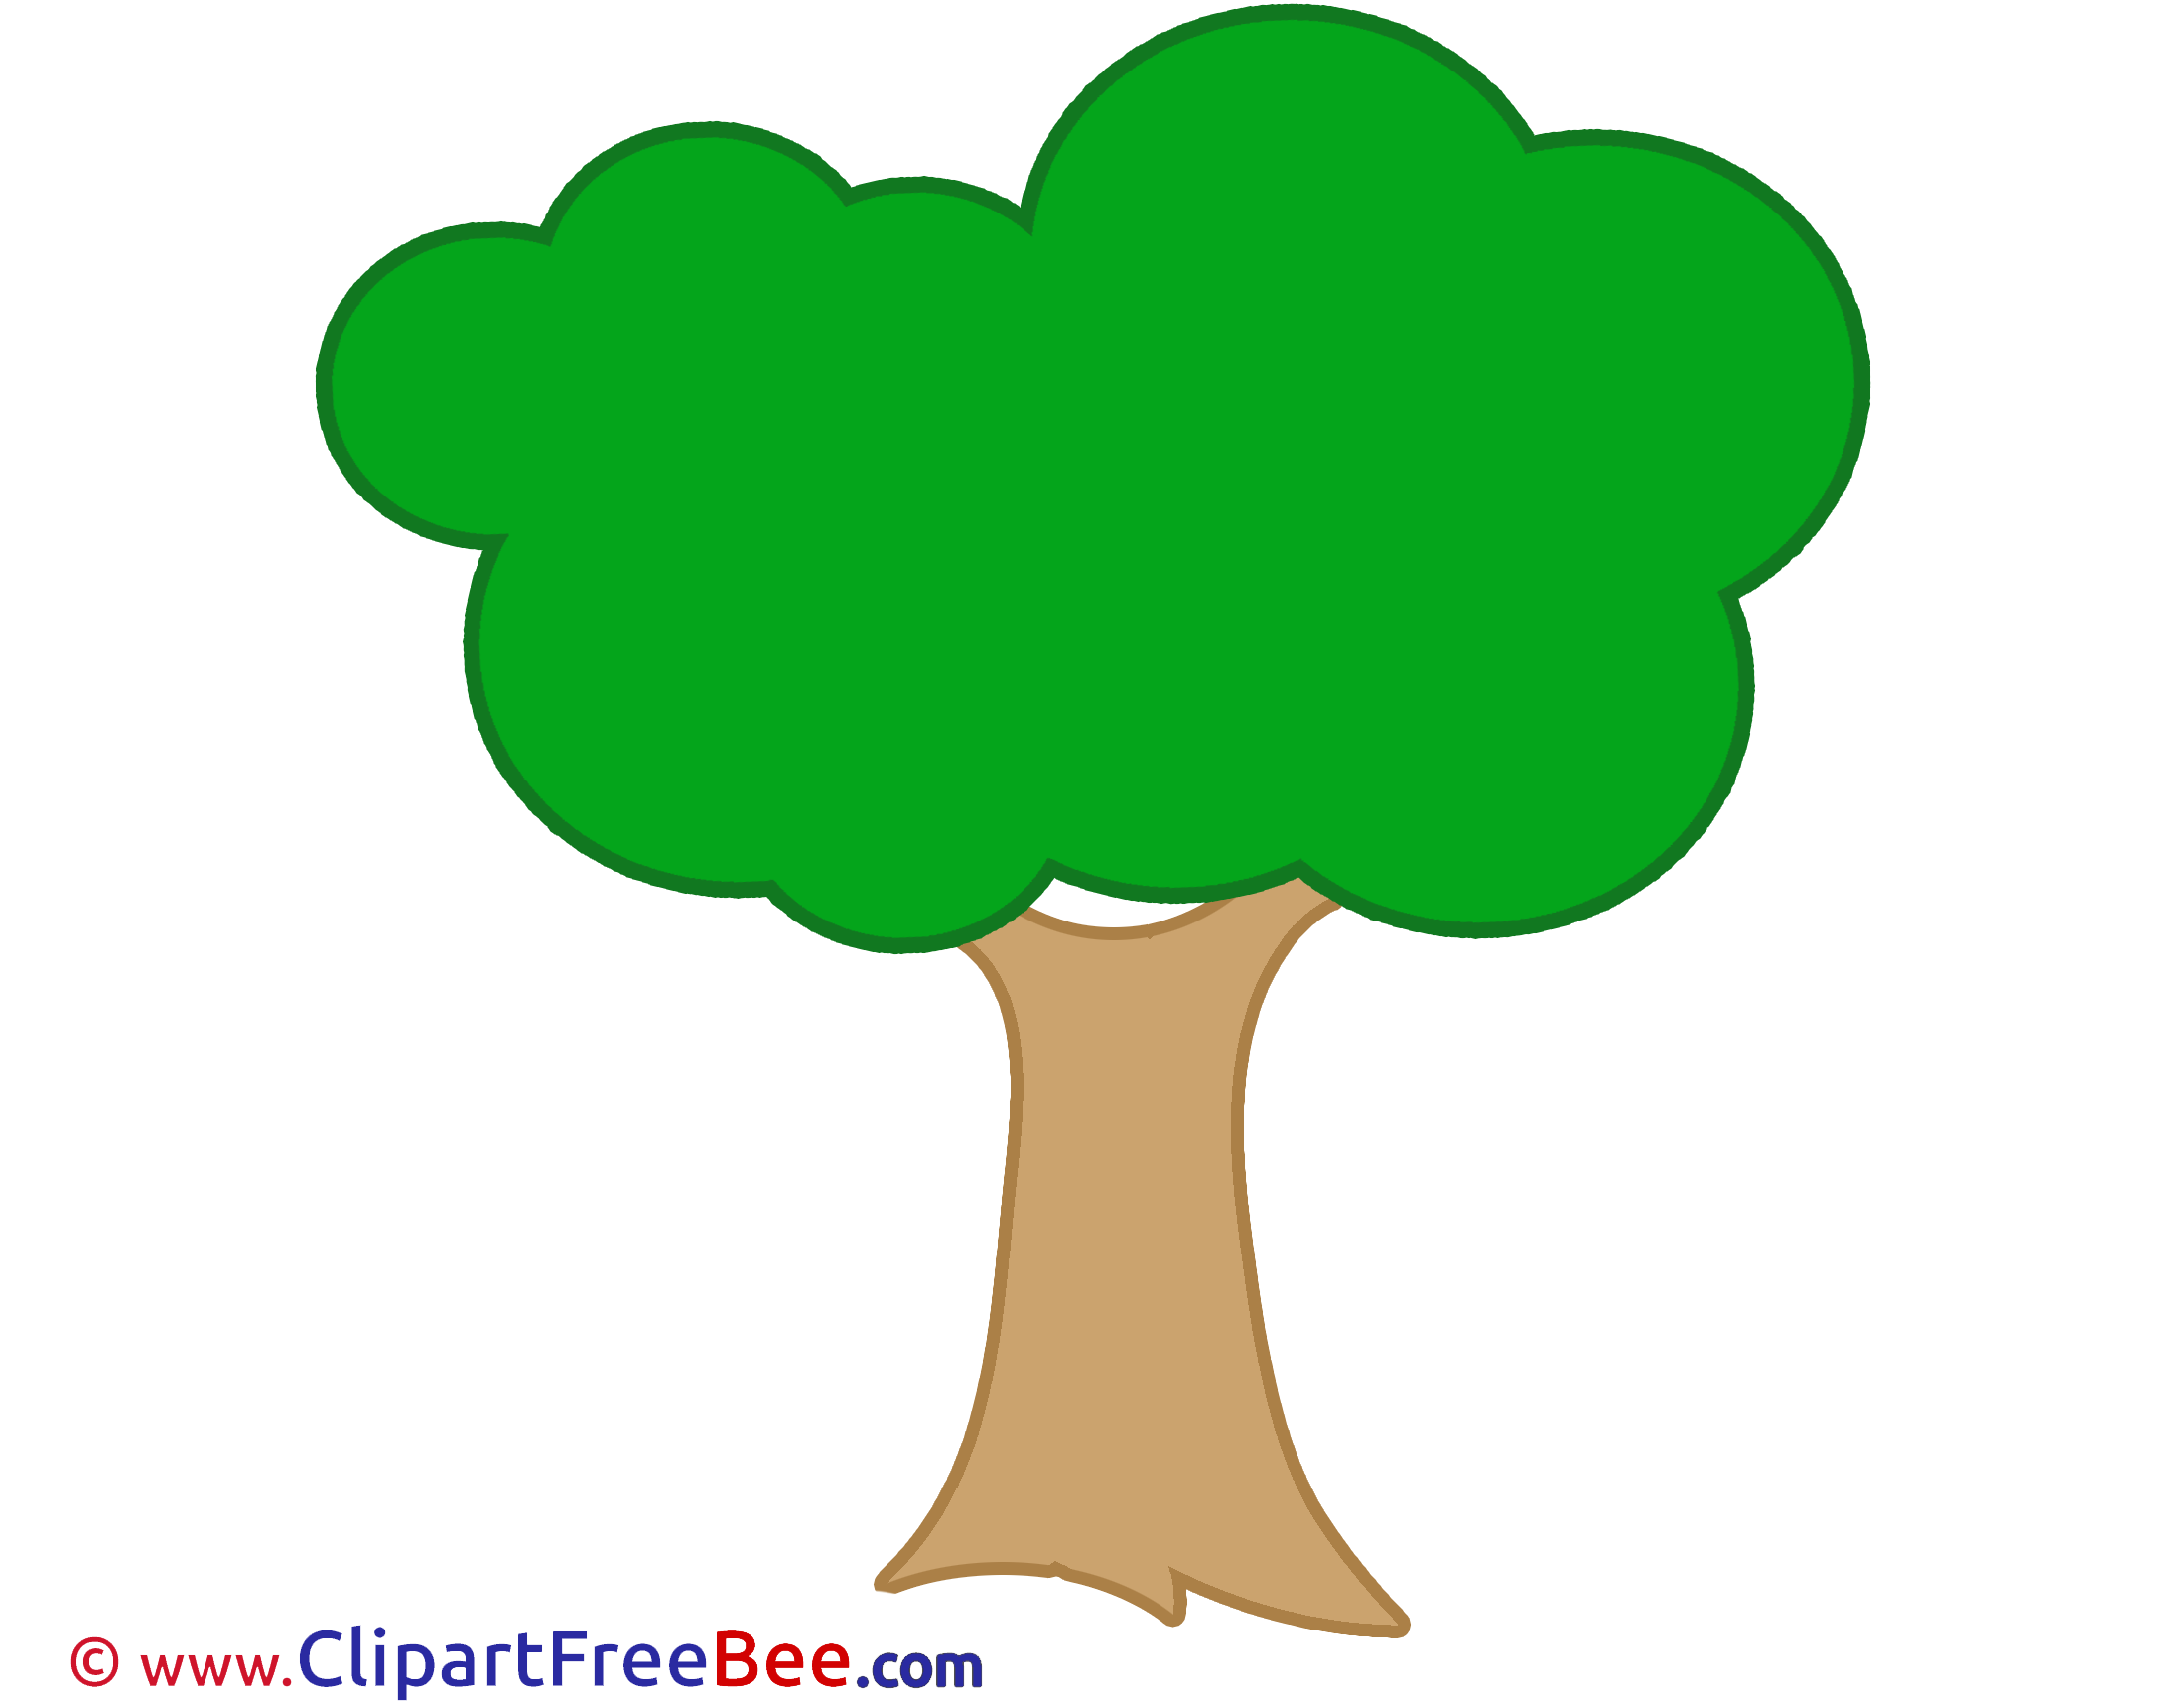 Tree Clipart free Illustrations